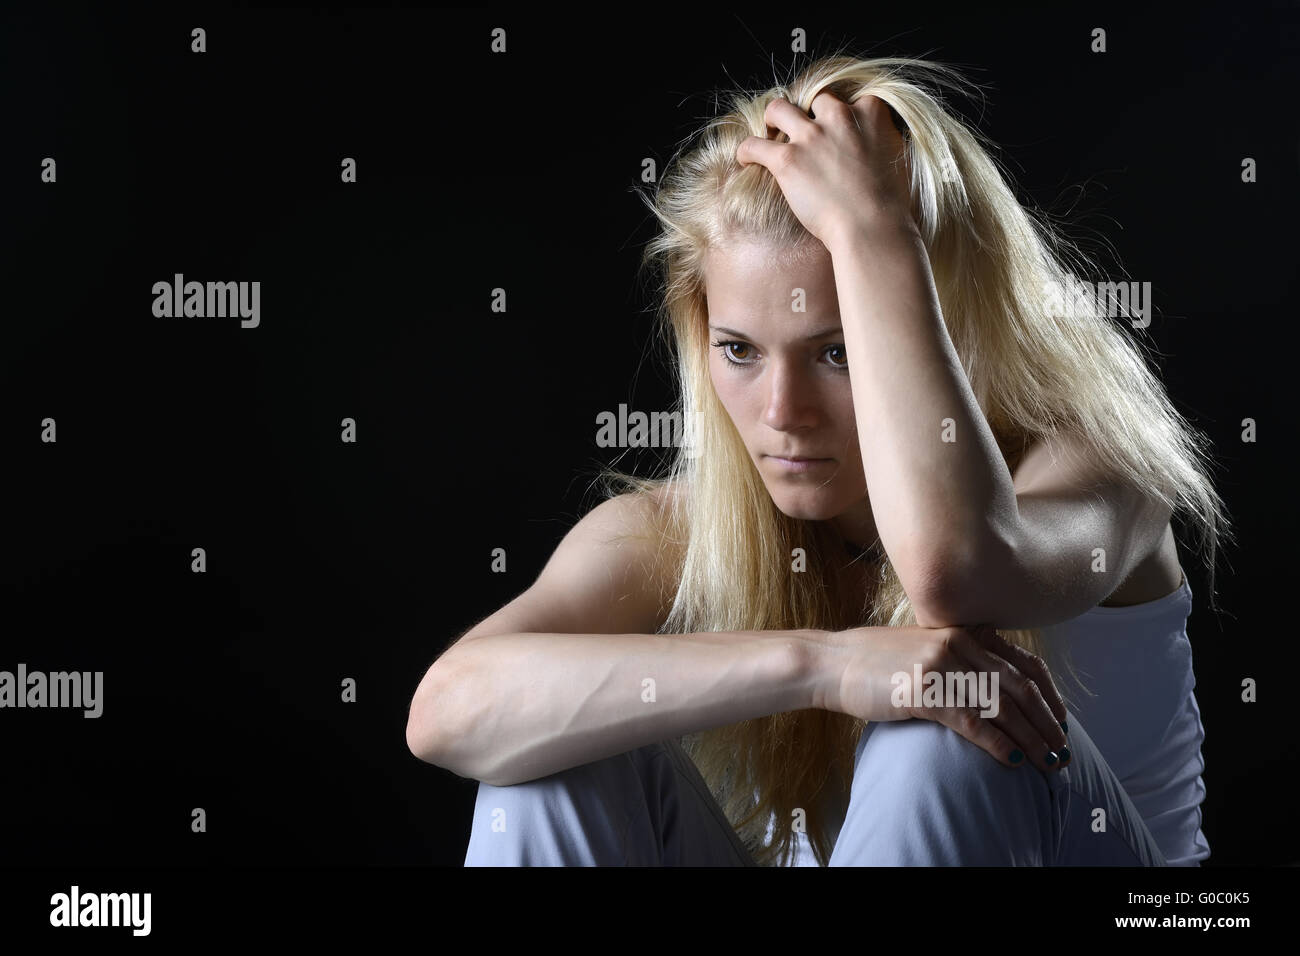 unhappy young woman Stock Photo